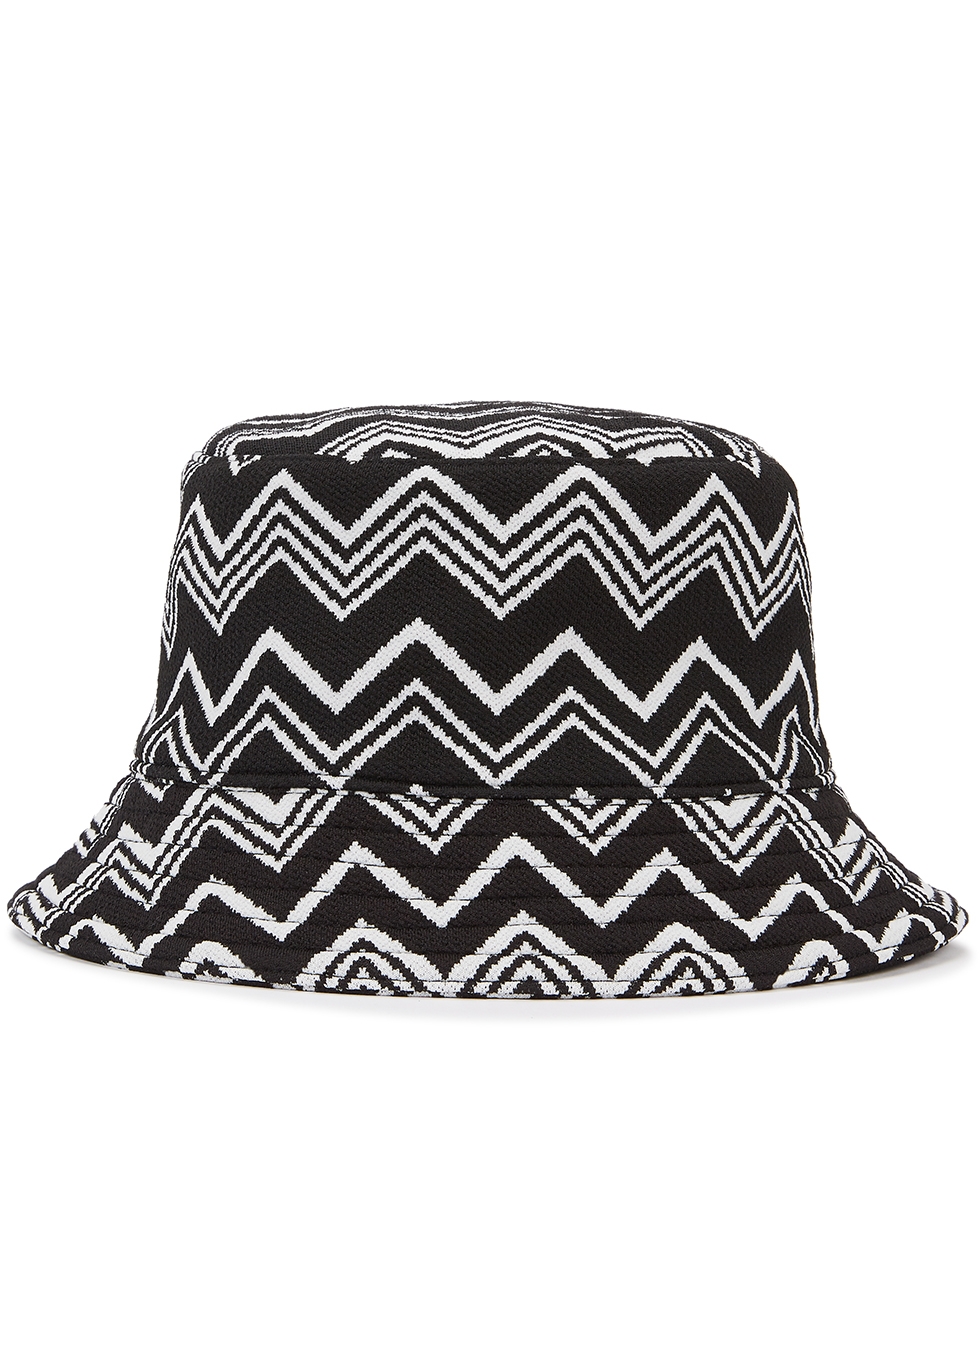 Zigzag monochrome terry bucket hat